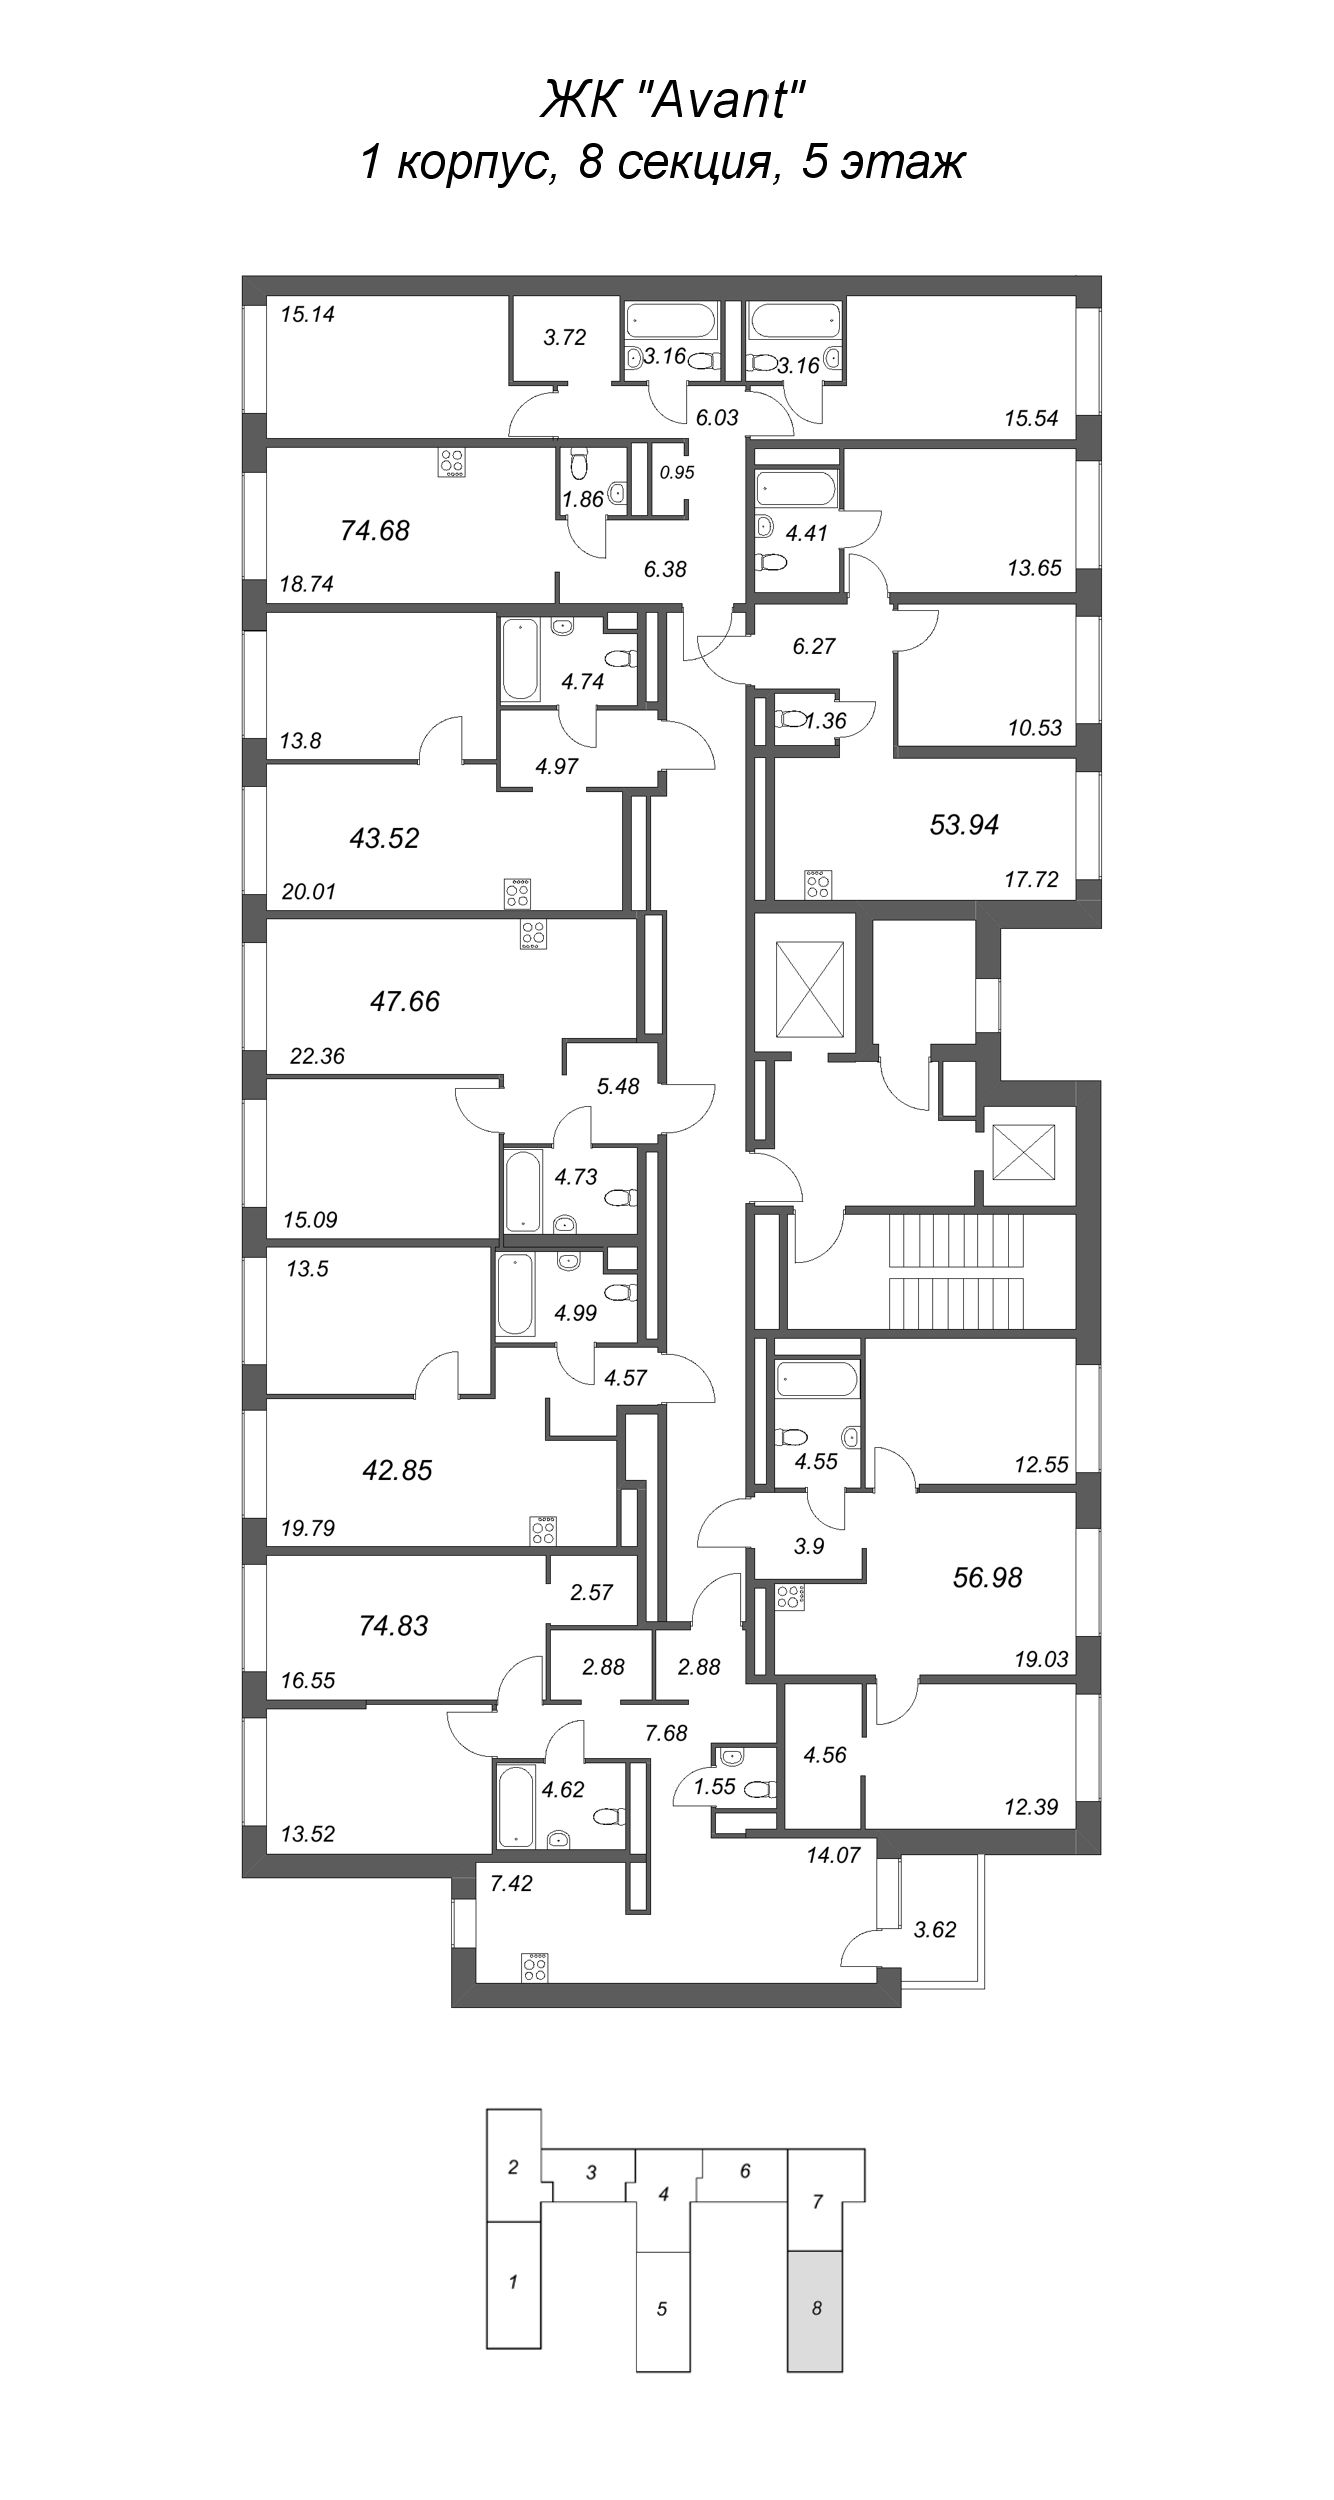 3-комнатная (Евро) квартира, 56.98 м² - планировка этажа